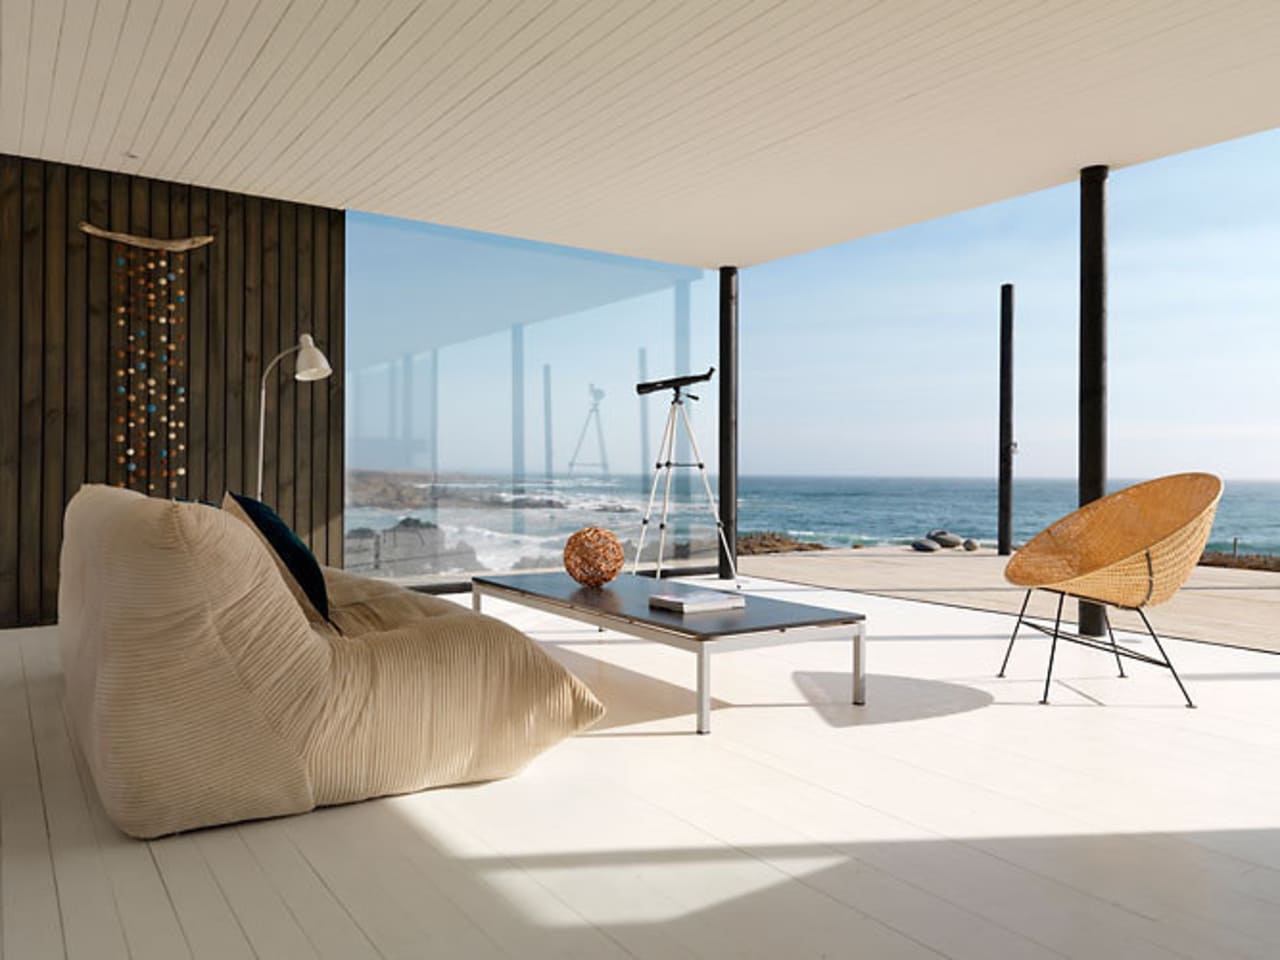  Minimalist Beach House Design 